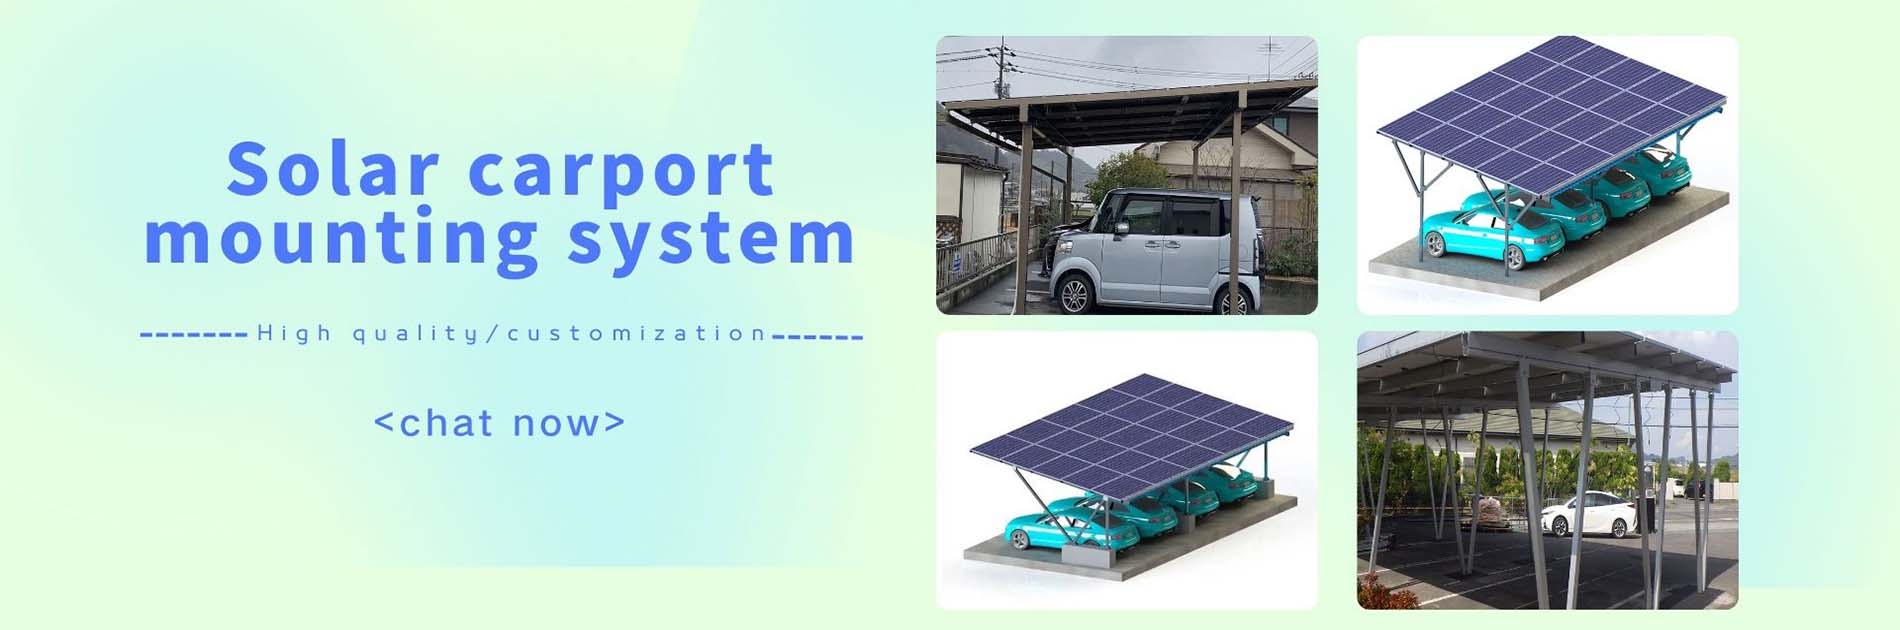 solar carport mounting system1